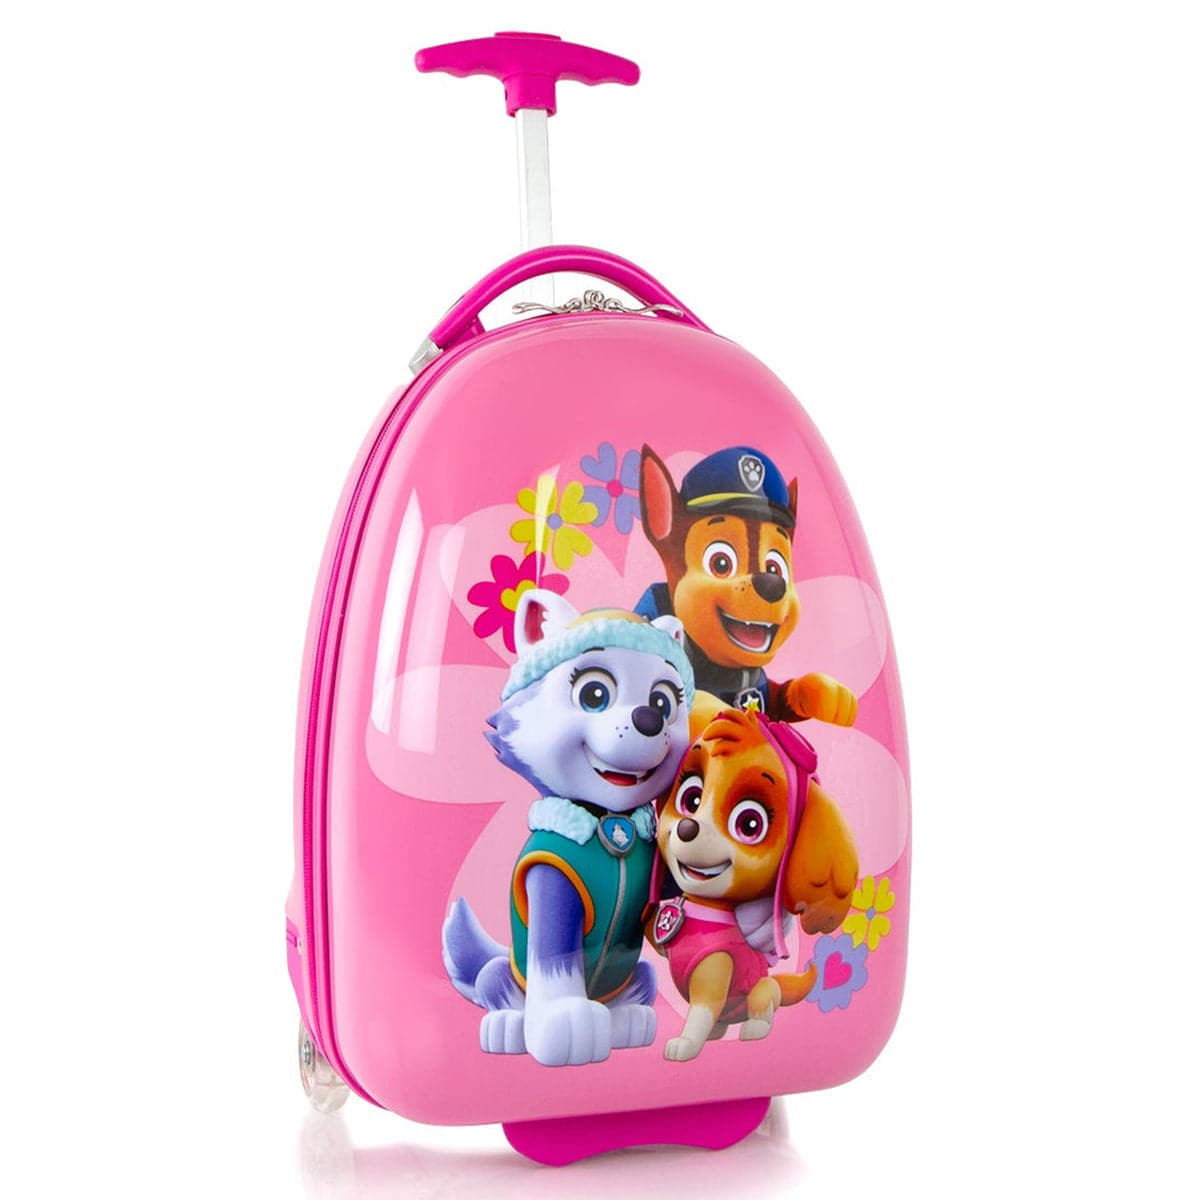 Heys Nickelodeon Paw Patrol Egg Shape Kids Luggage